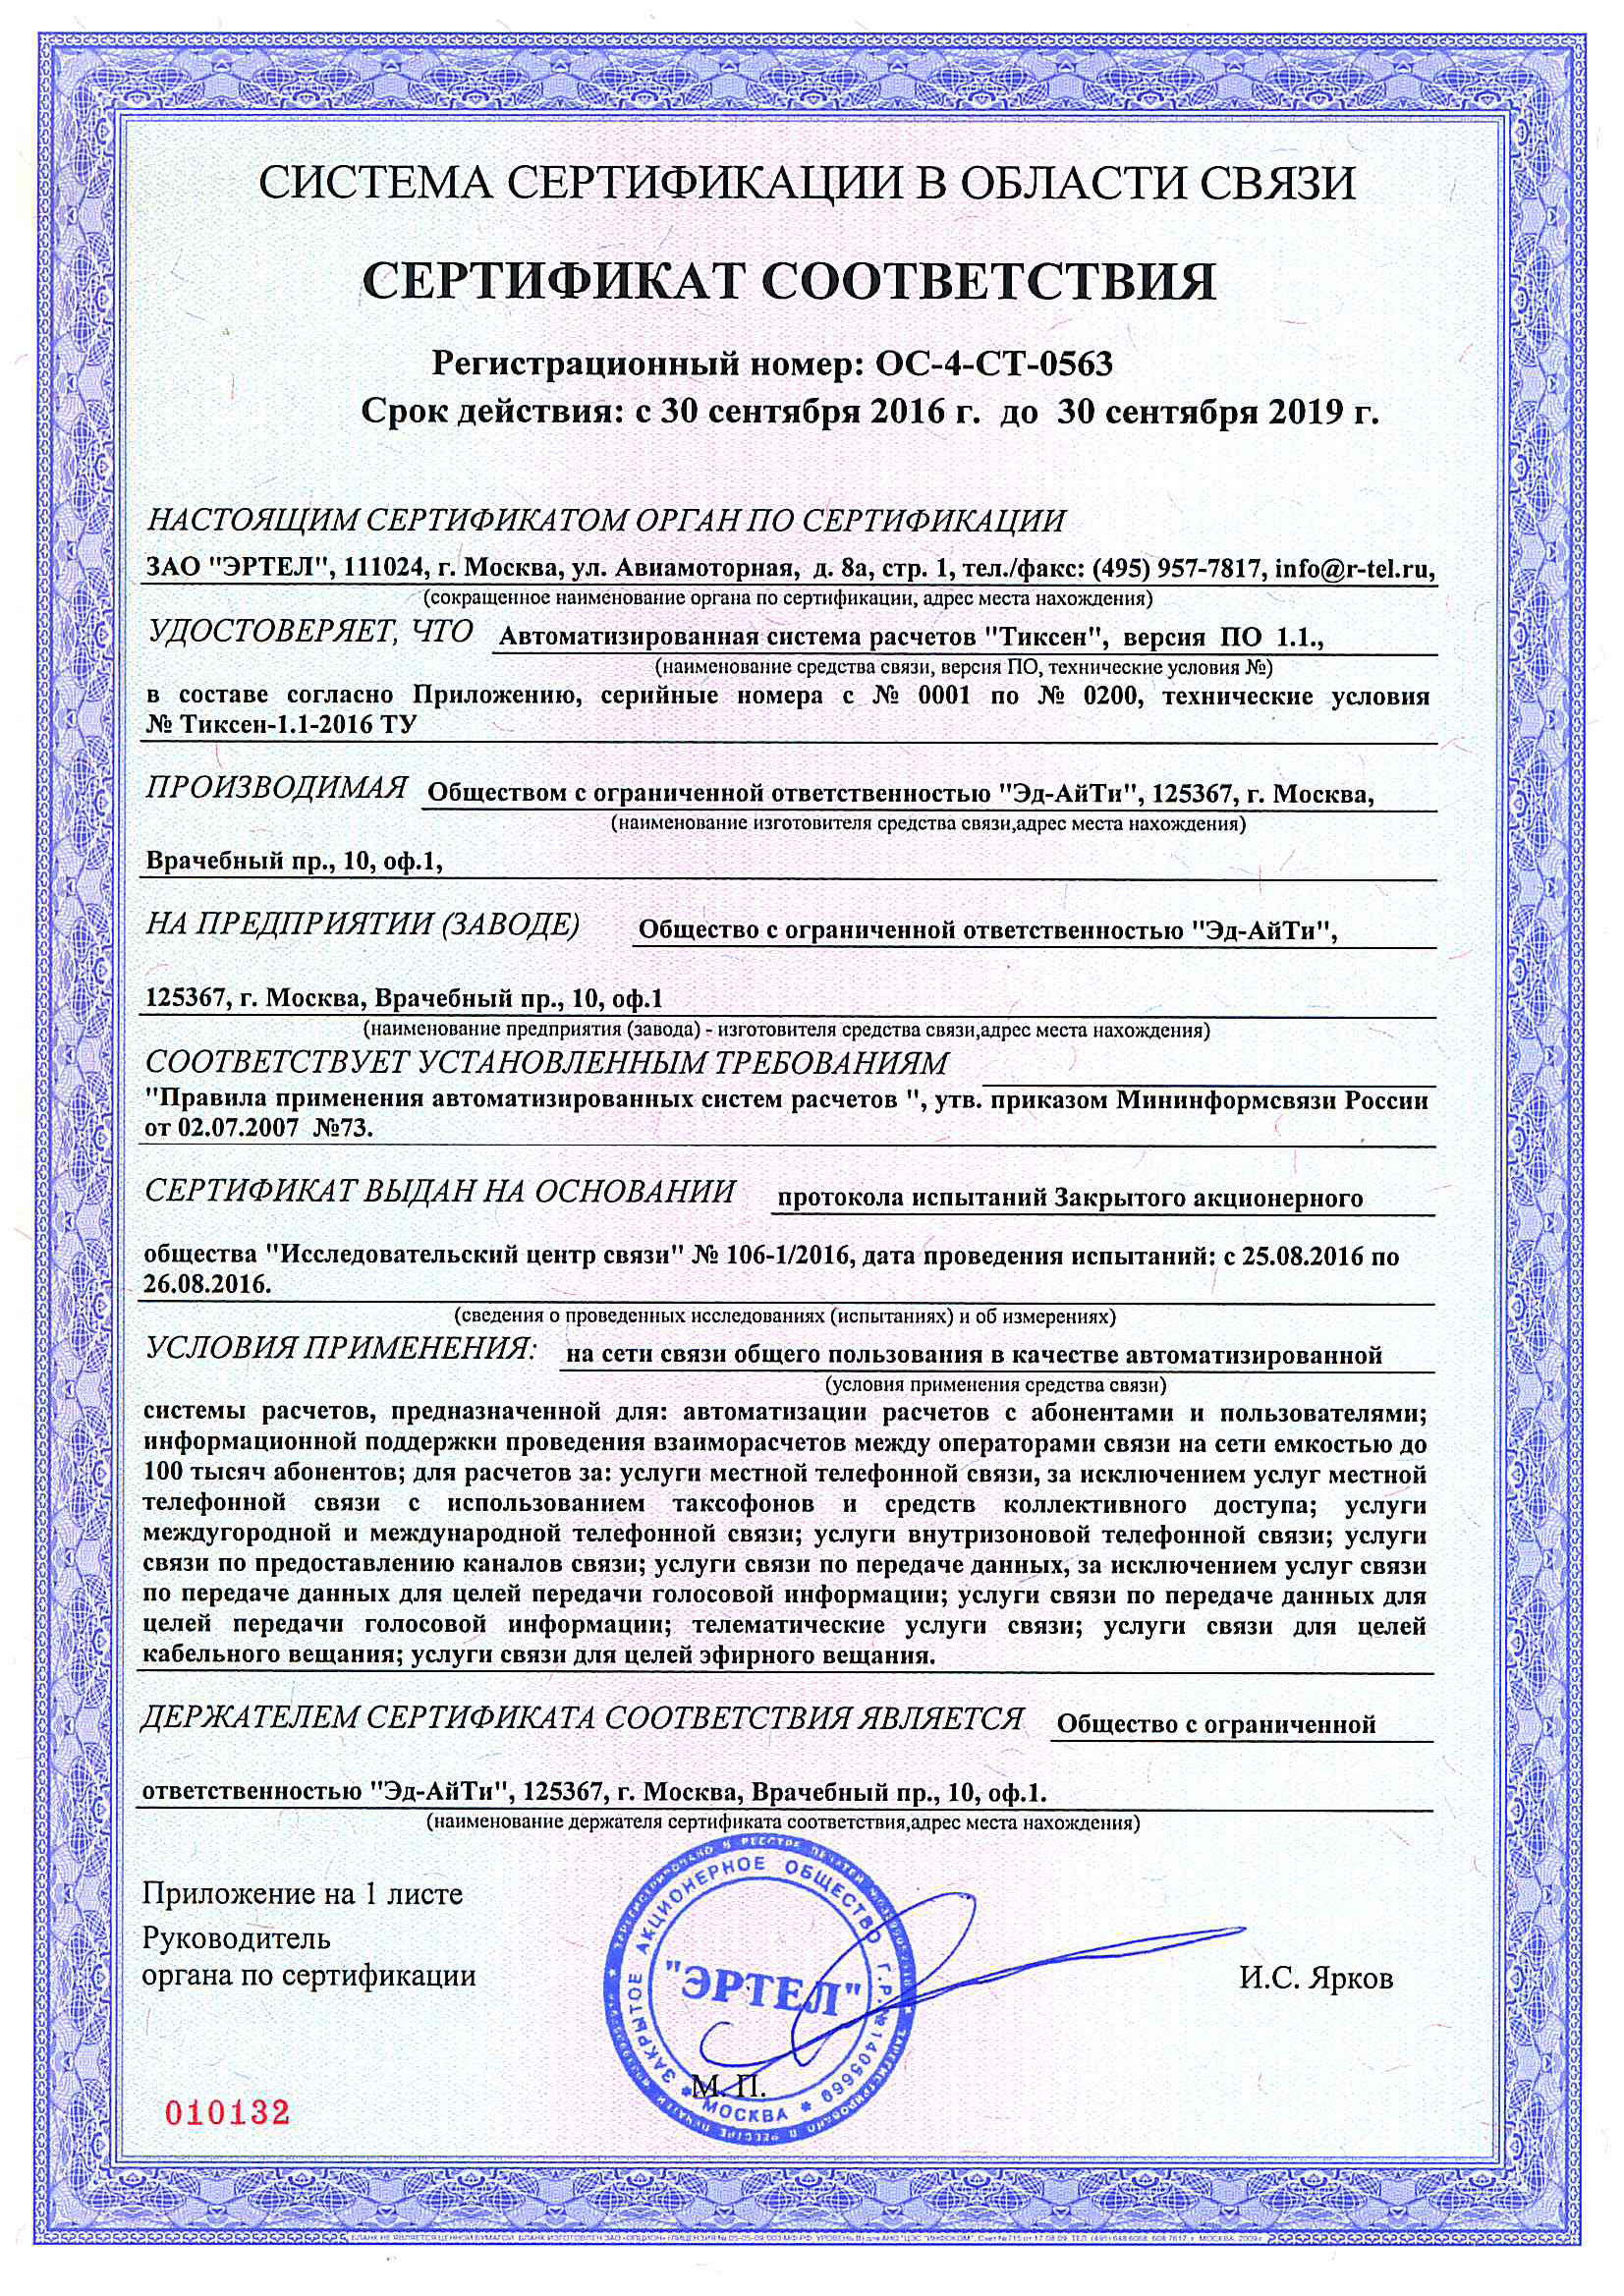 Сертификат АСР Тиксен (Tixen). биллинг телефонии. биллинг Интернет